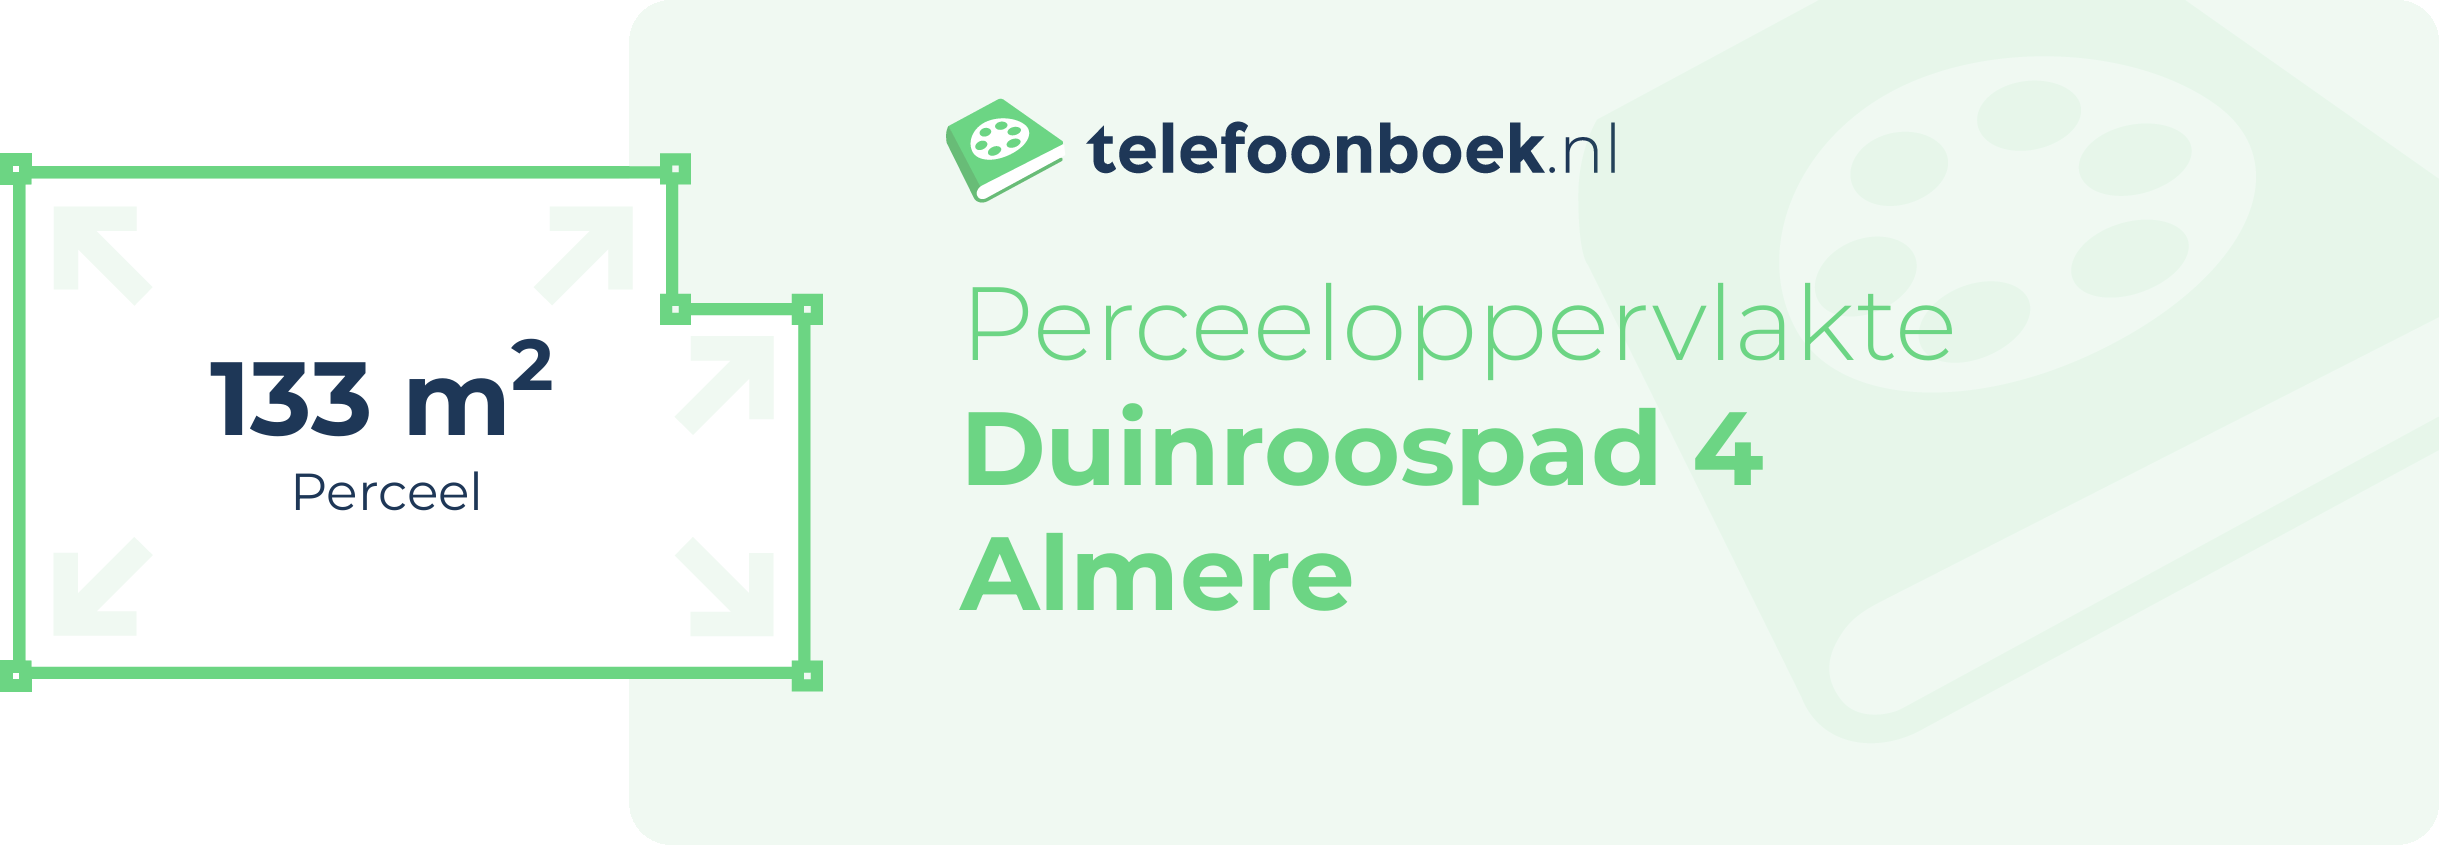 Perceeloppervlakte Duinroospad 4 Almere